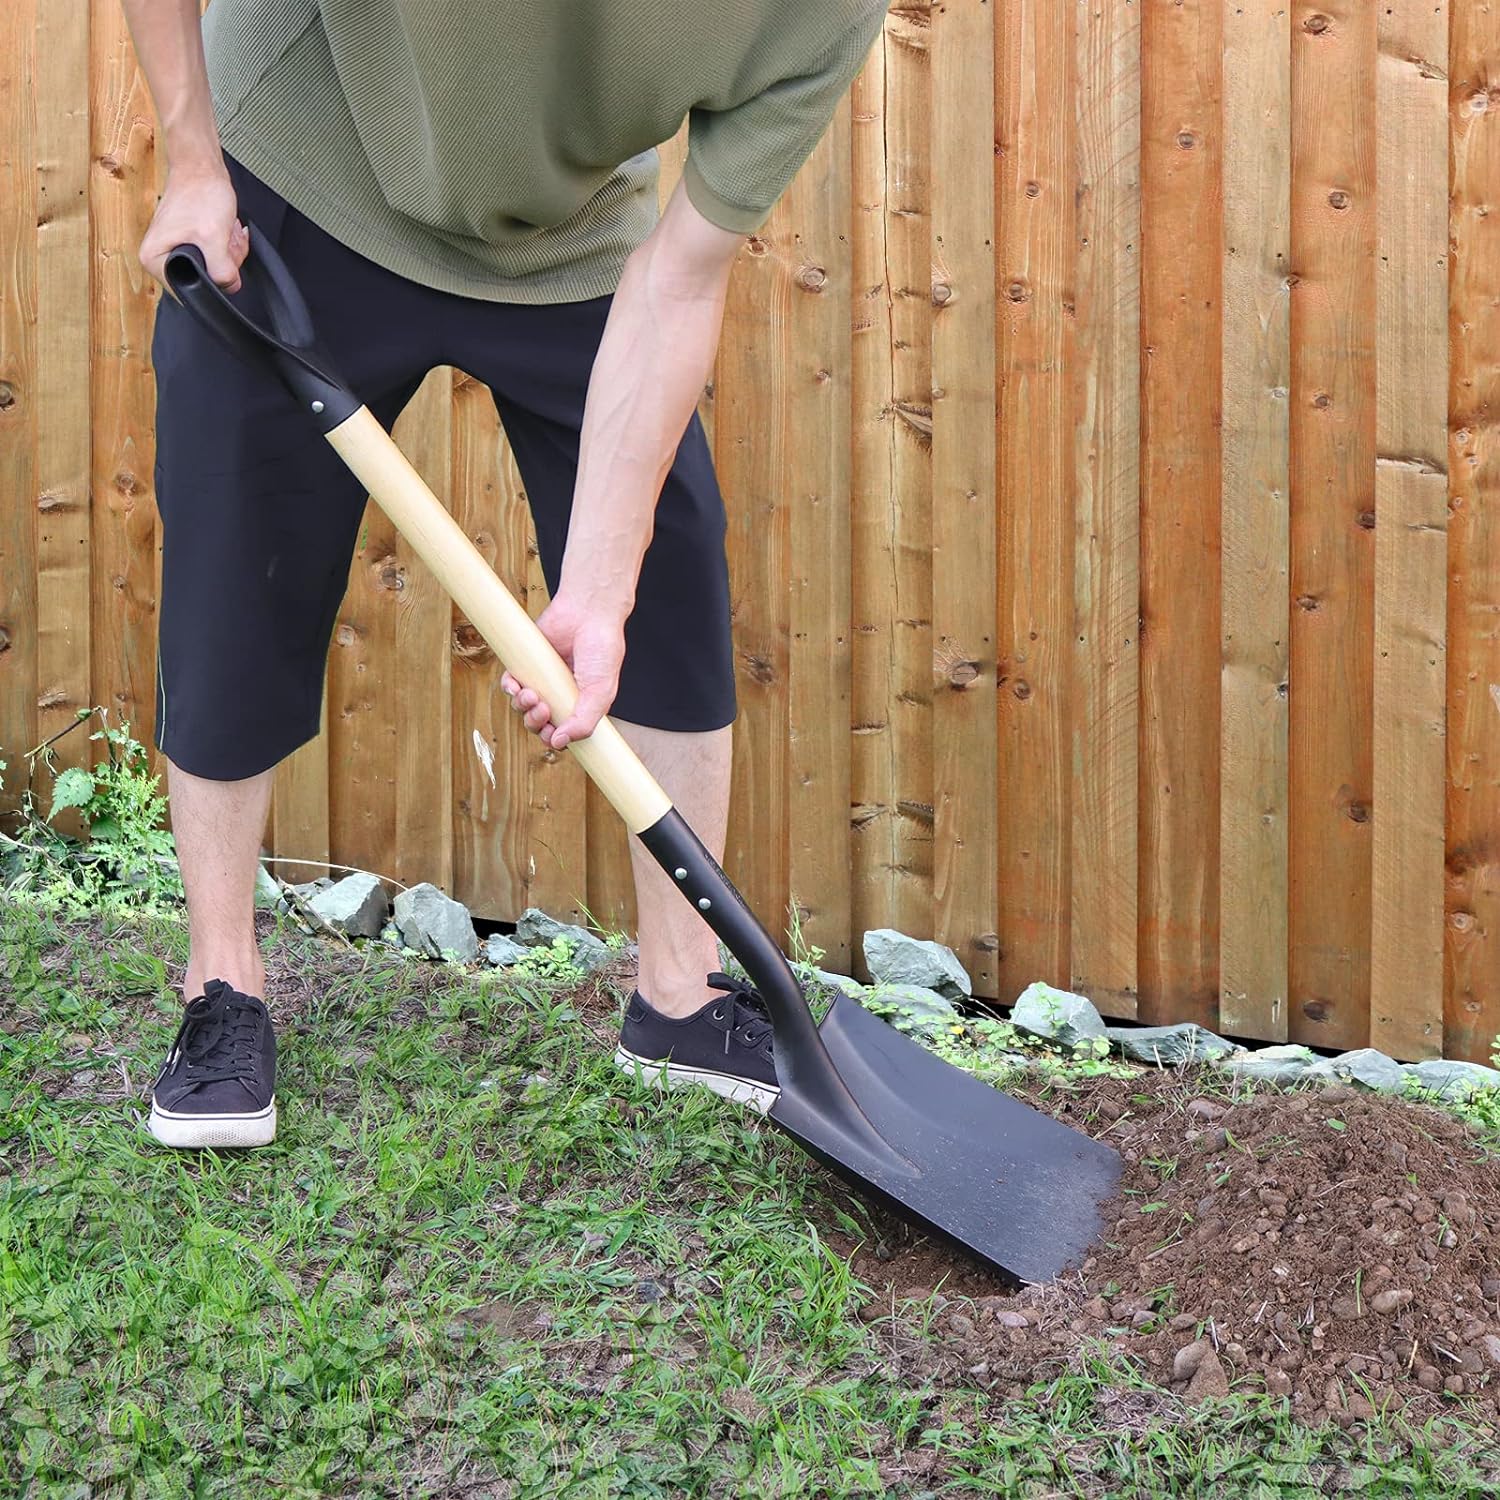 N\C Square Shovel, Shovels for Digging with D-Handle, Overall 41-Inch Long Garden Shovel, Transfer Shovel, Snow Shovel for Car, Gar